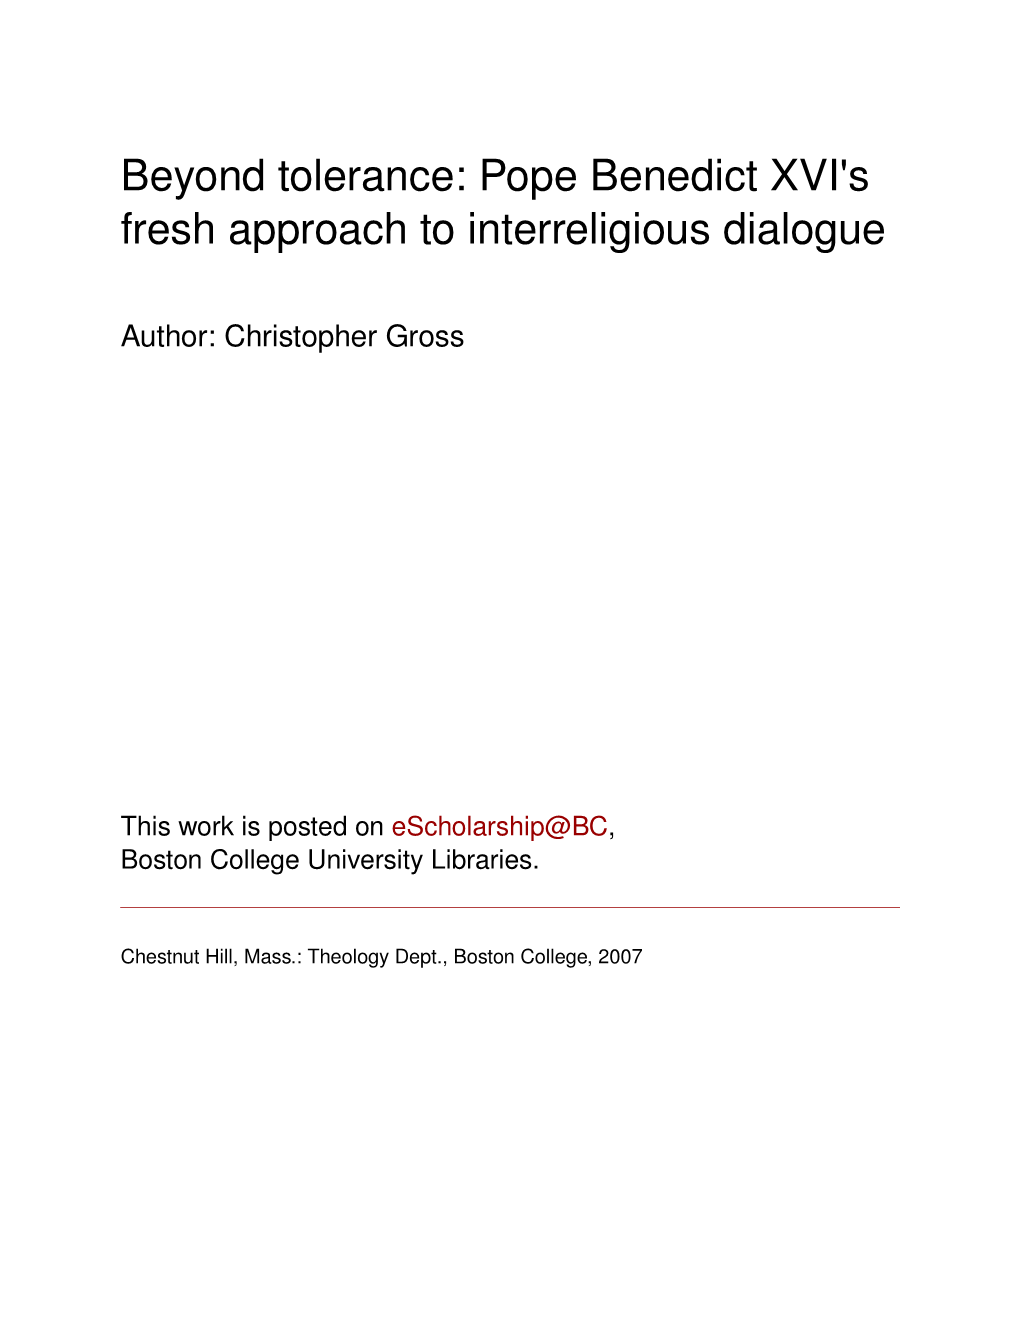 Pope Benedict XVI's Fresh Approach to Interreligious Dialogue